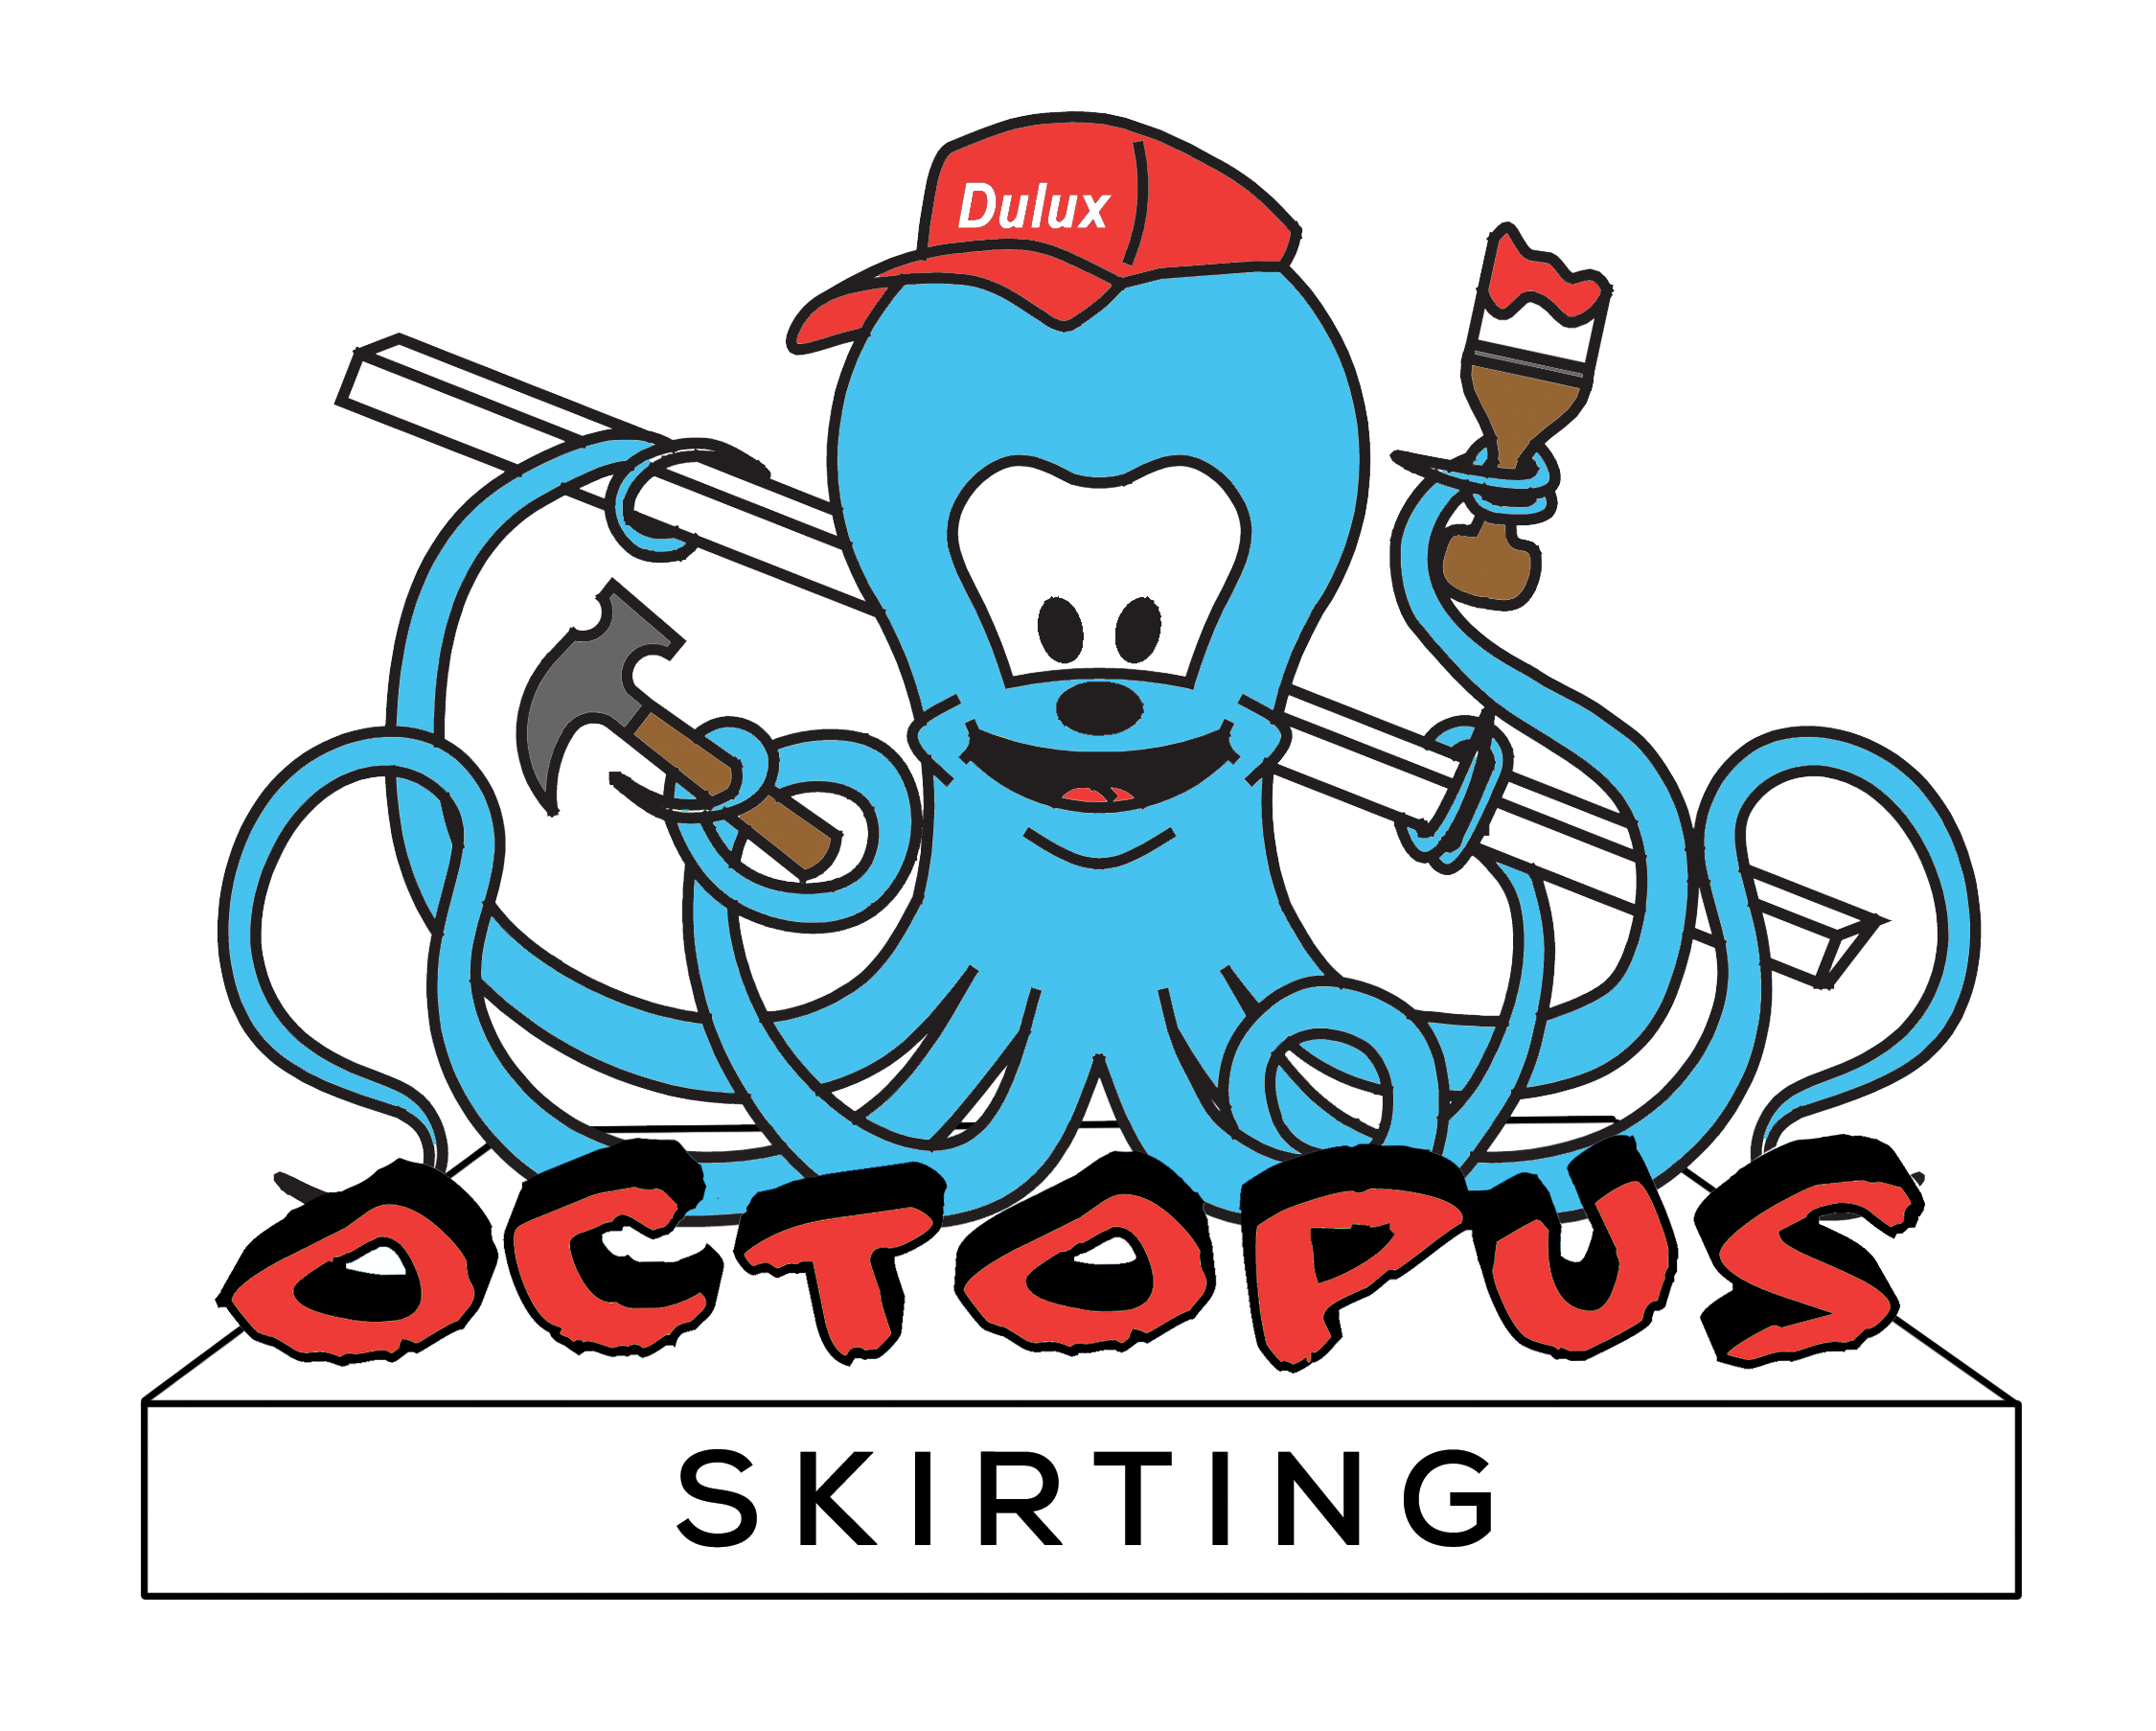 Octopus Skirting Boards, Thursday, September 10, 2020, Press release picture